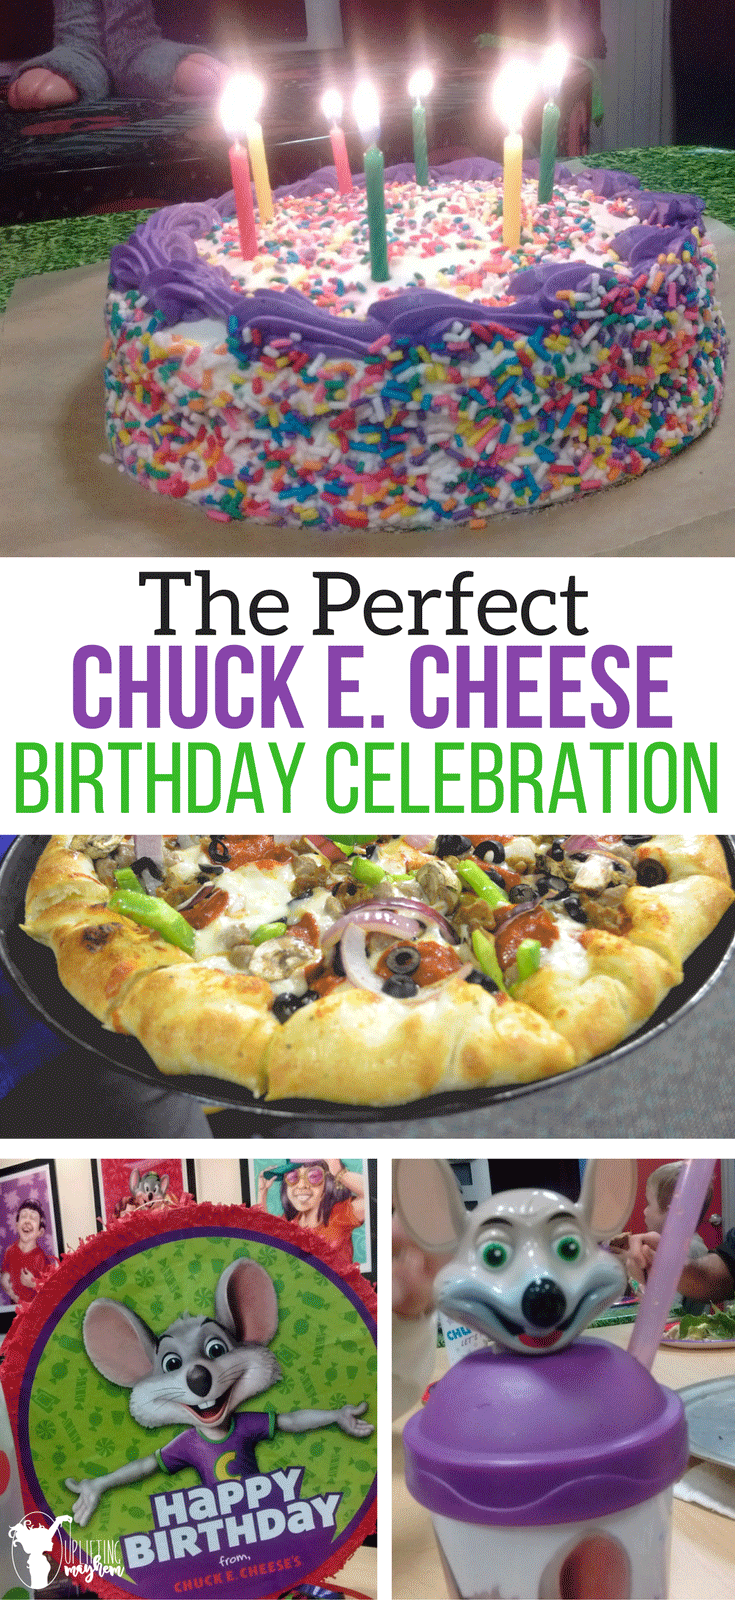 The Perfect Chuck E. Cheese Birthday Celebration